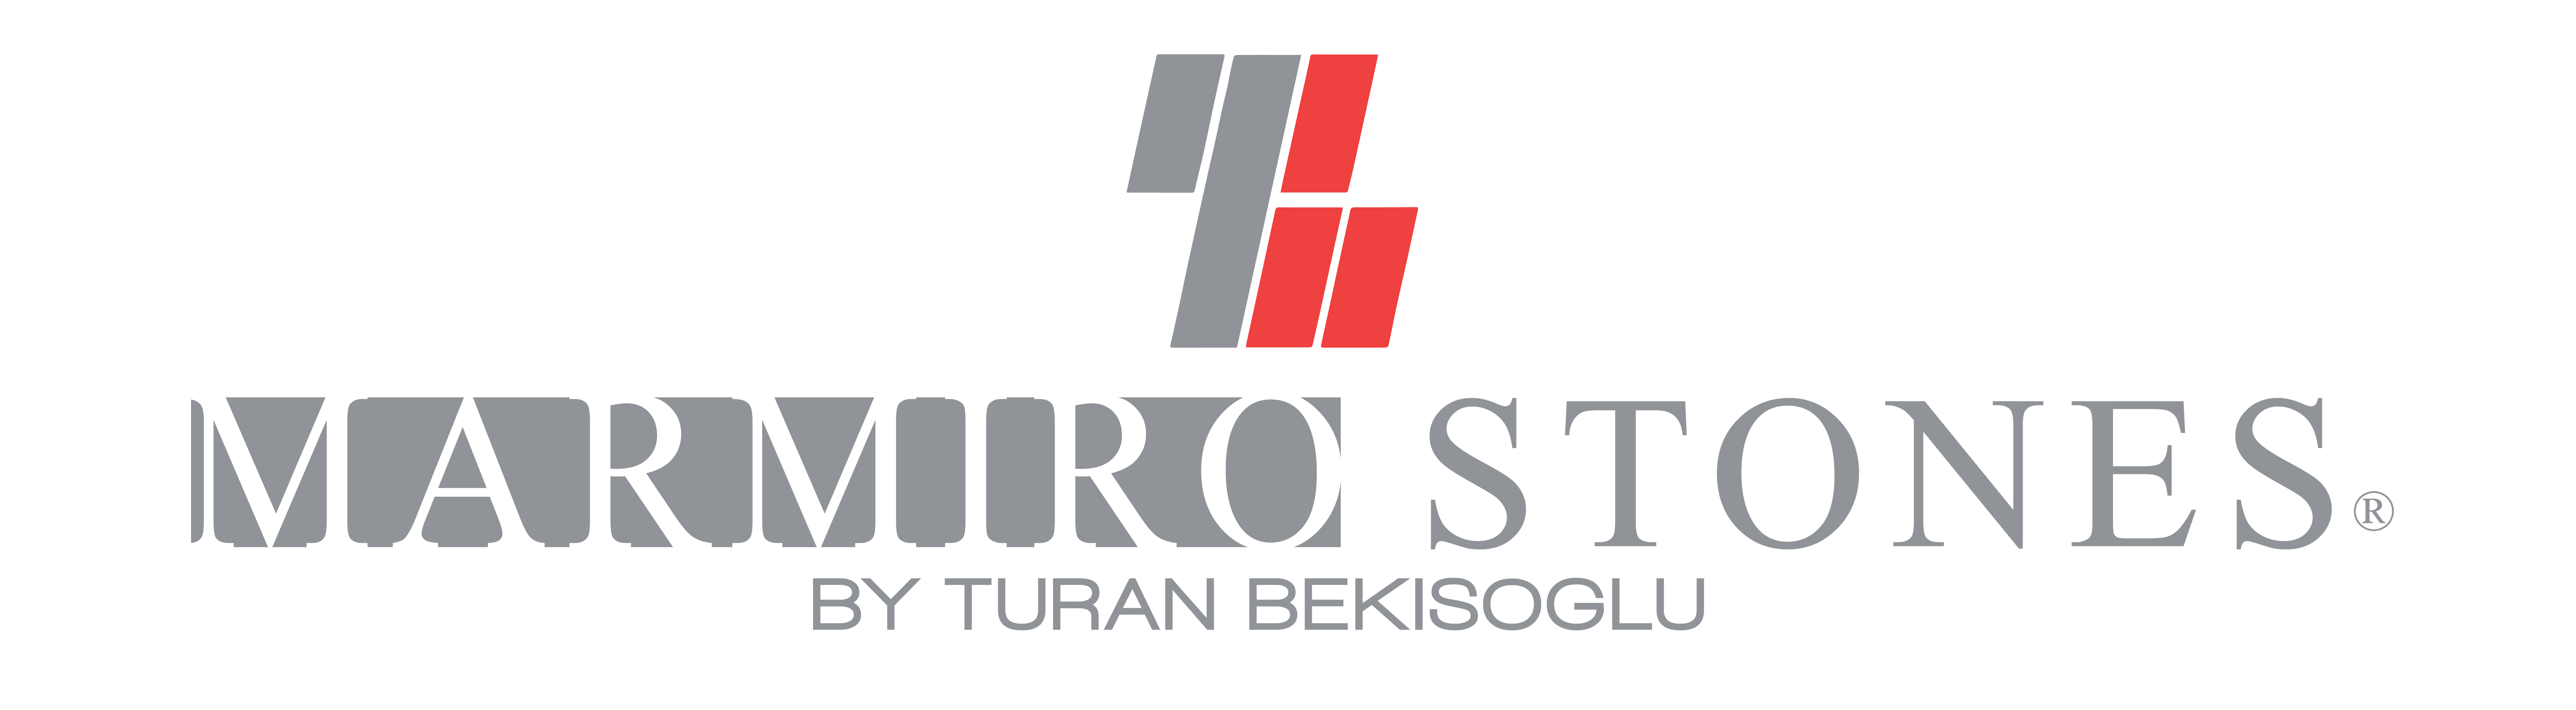 Marimiro Stones by Turan Bekisoglu Logo